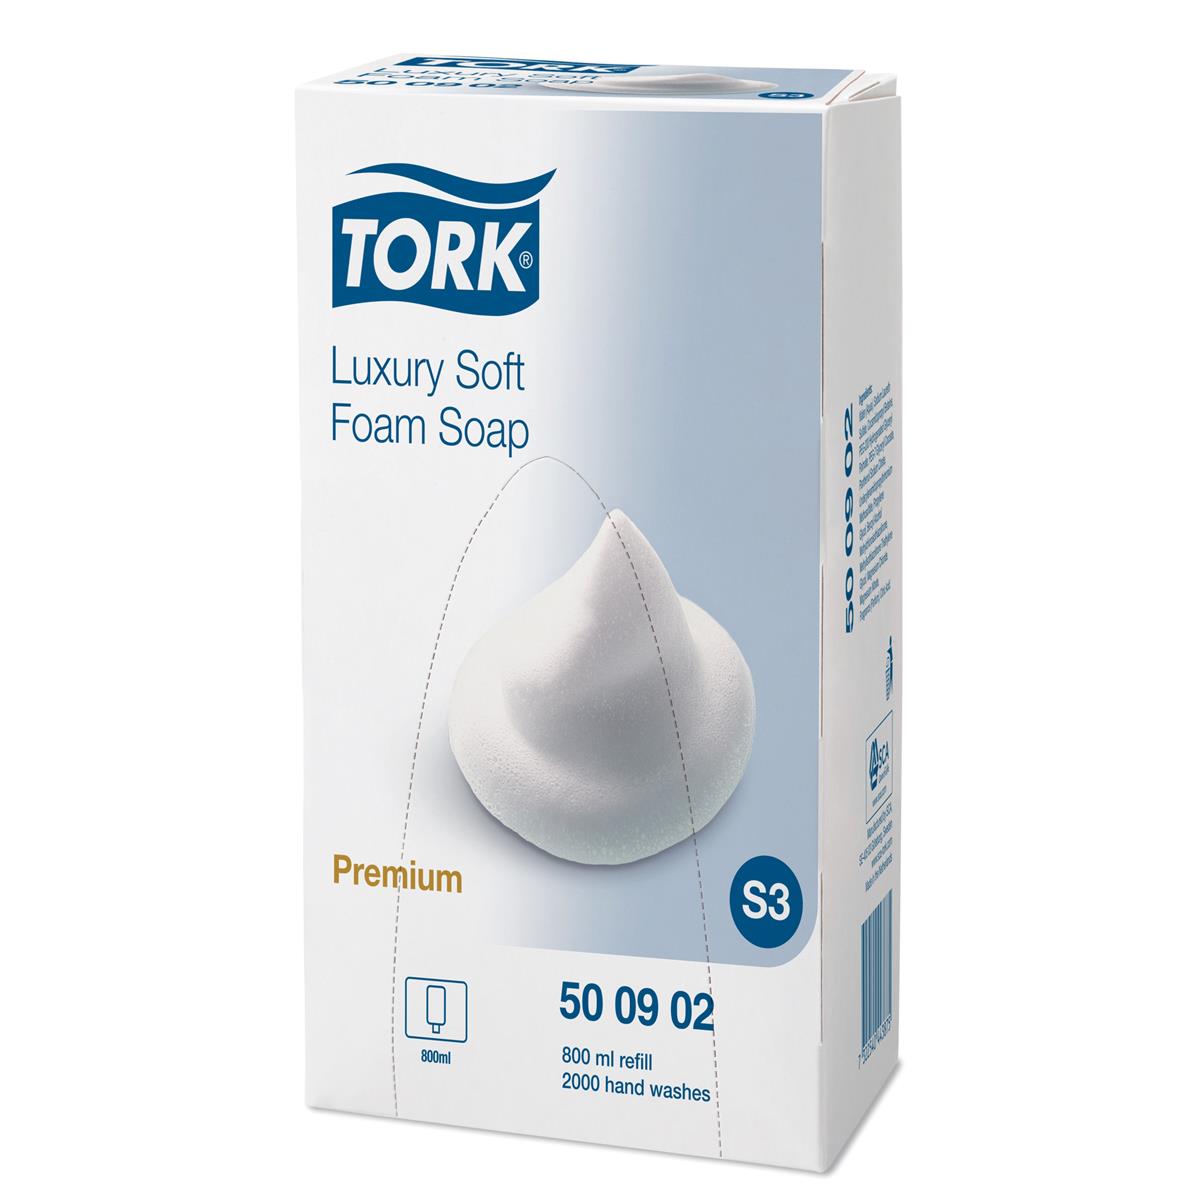 TORK PREMIUM SOAP FOAM LUXURYmydło piankowe 800 ml-1274